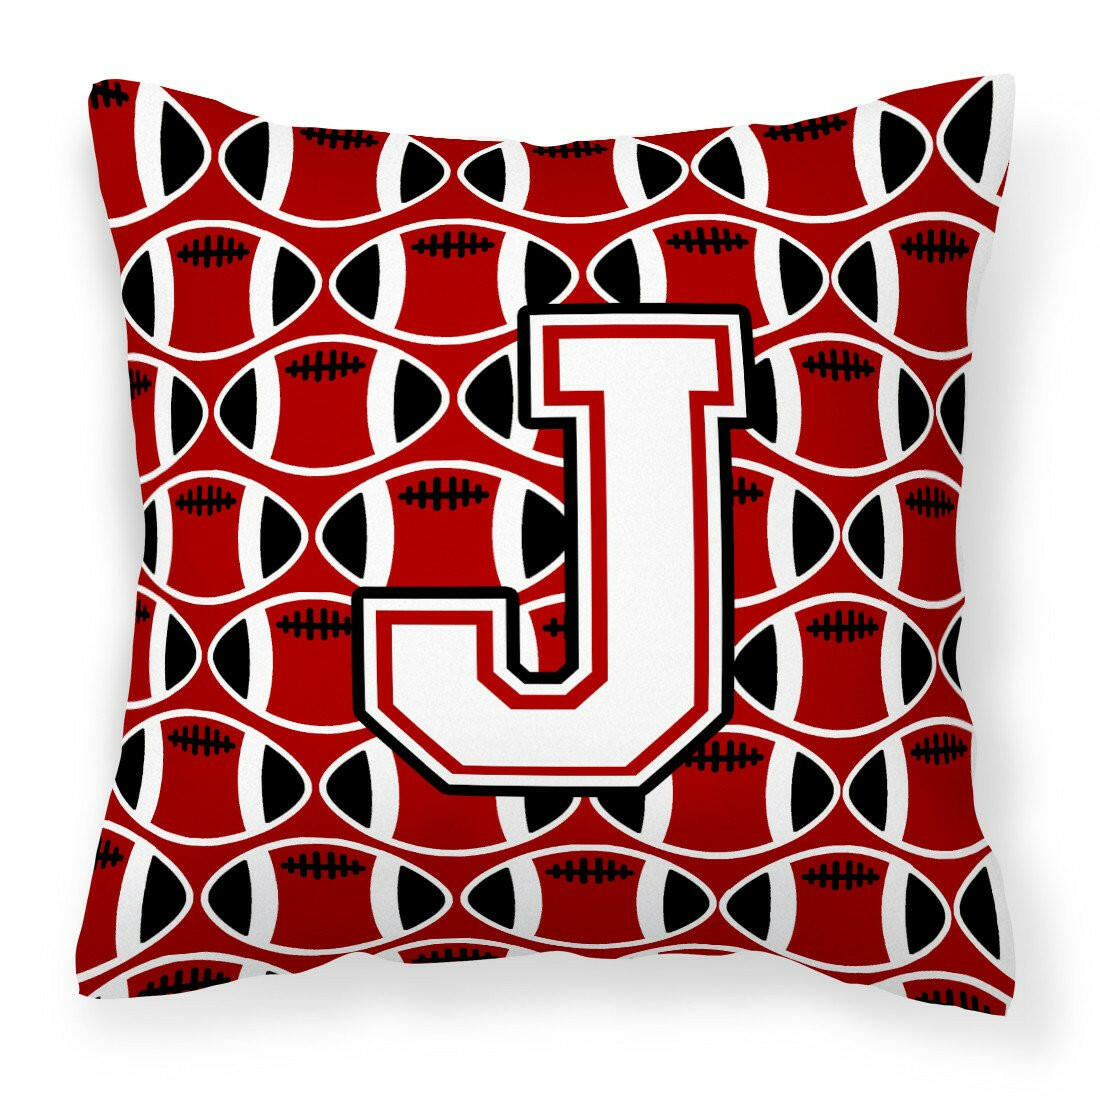 Letter J Football Cardinal and White Fabric Decorative Pillow CJ1082-JPW1414 by Caroline's Treasures